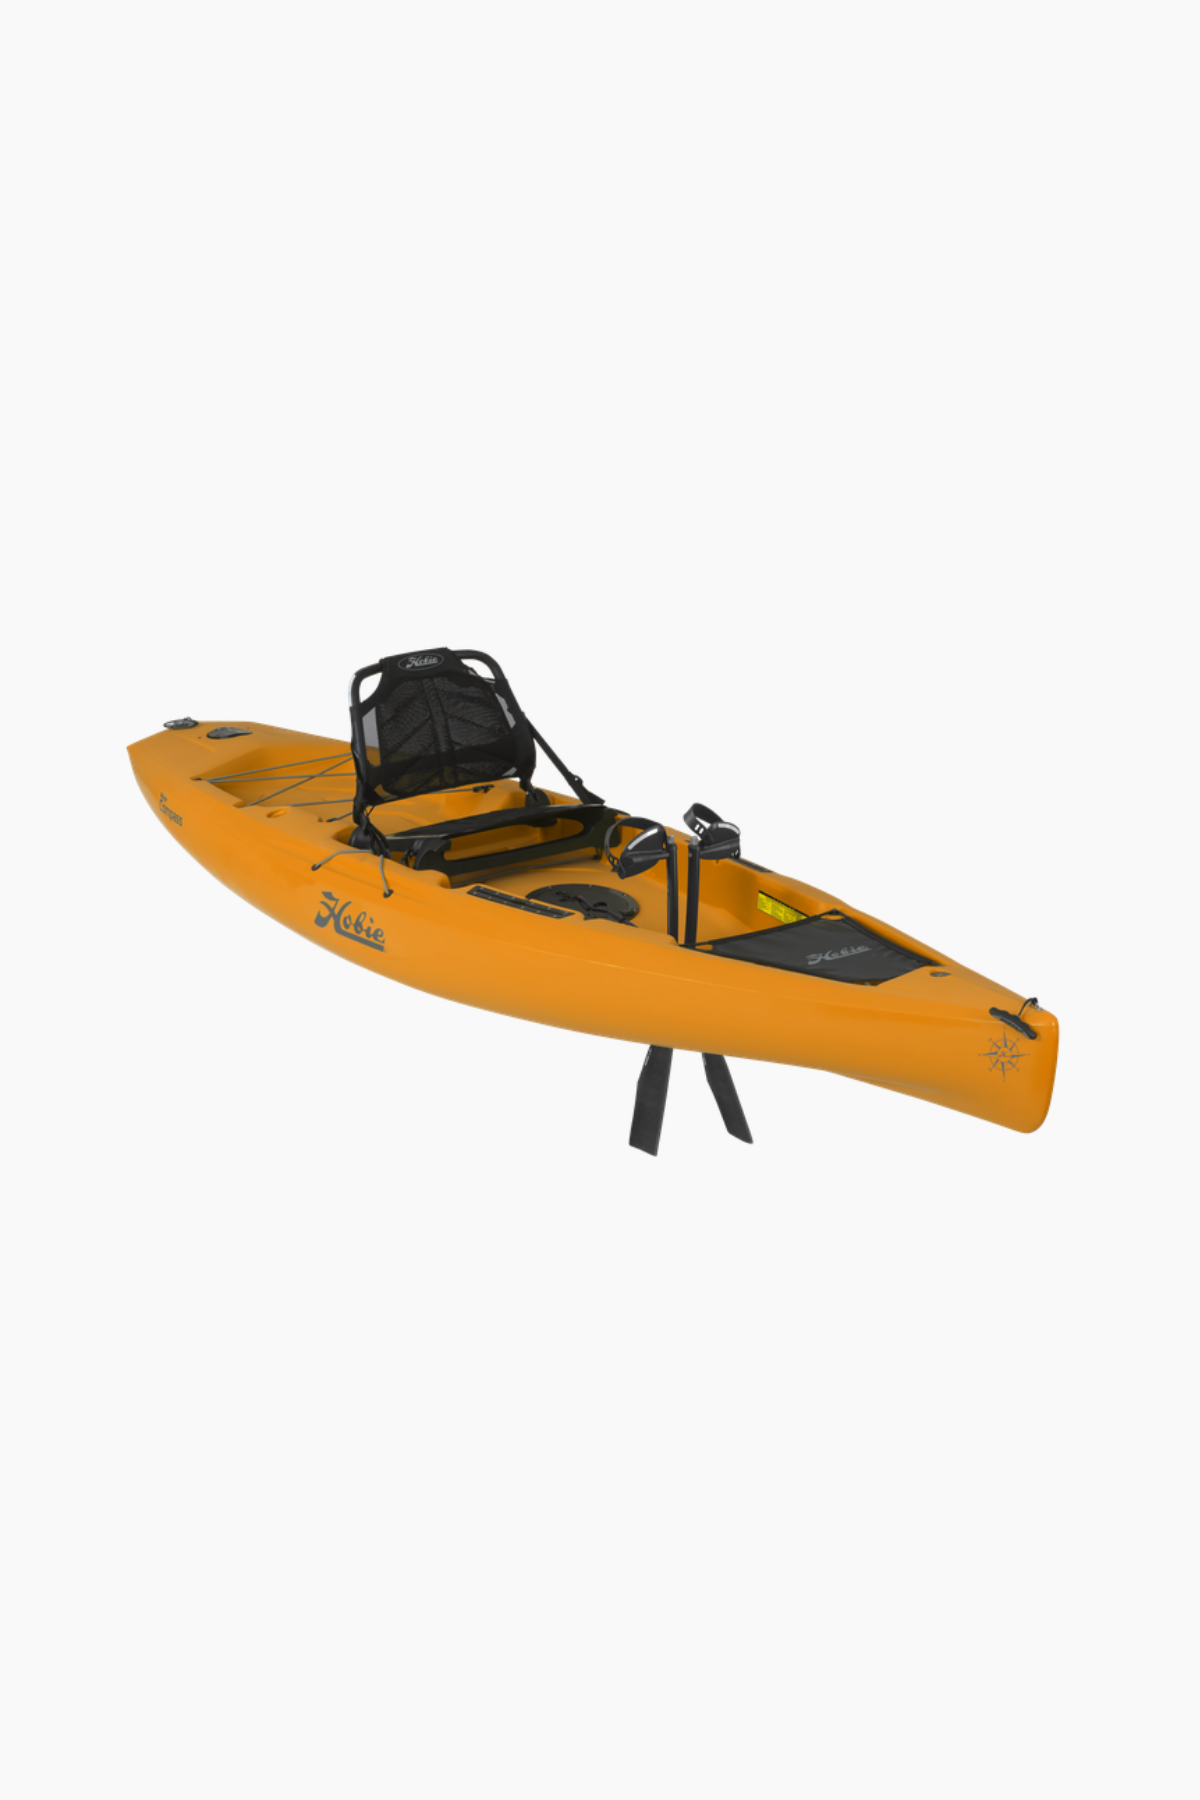 Hobie Mirage Compass Pedal Kayak - Cottage Toys - Peterborough - Ontario - Canada